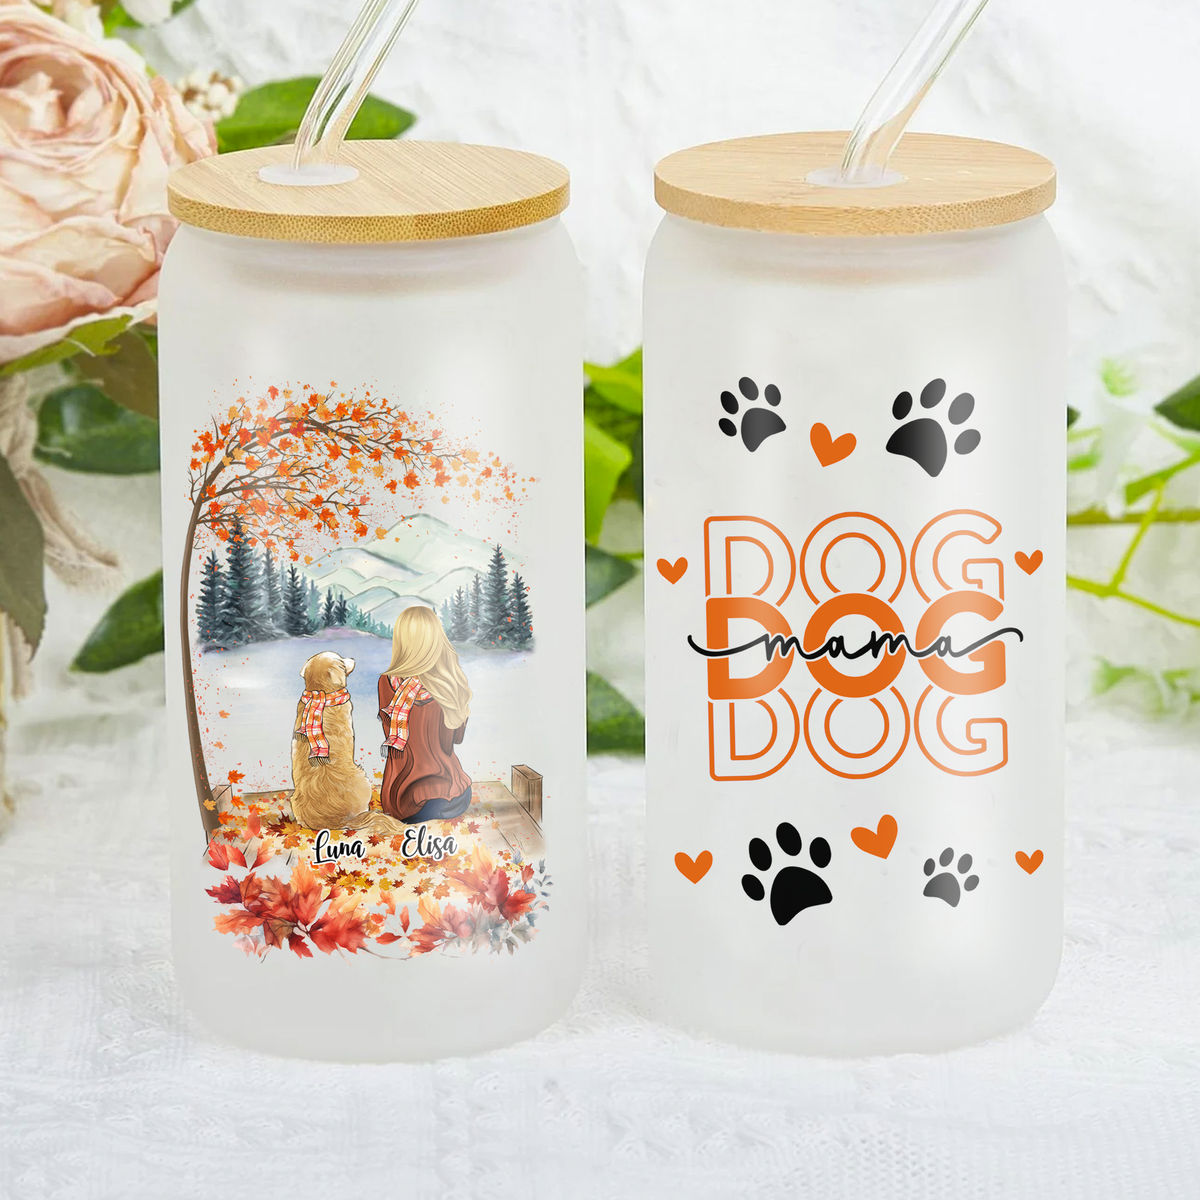 Dog Lover Gifts - Tumbler Glass - Dog Mama (T)